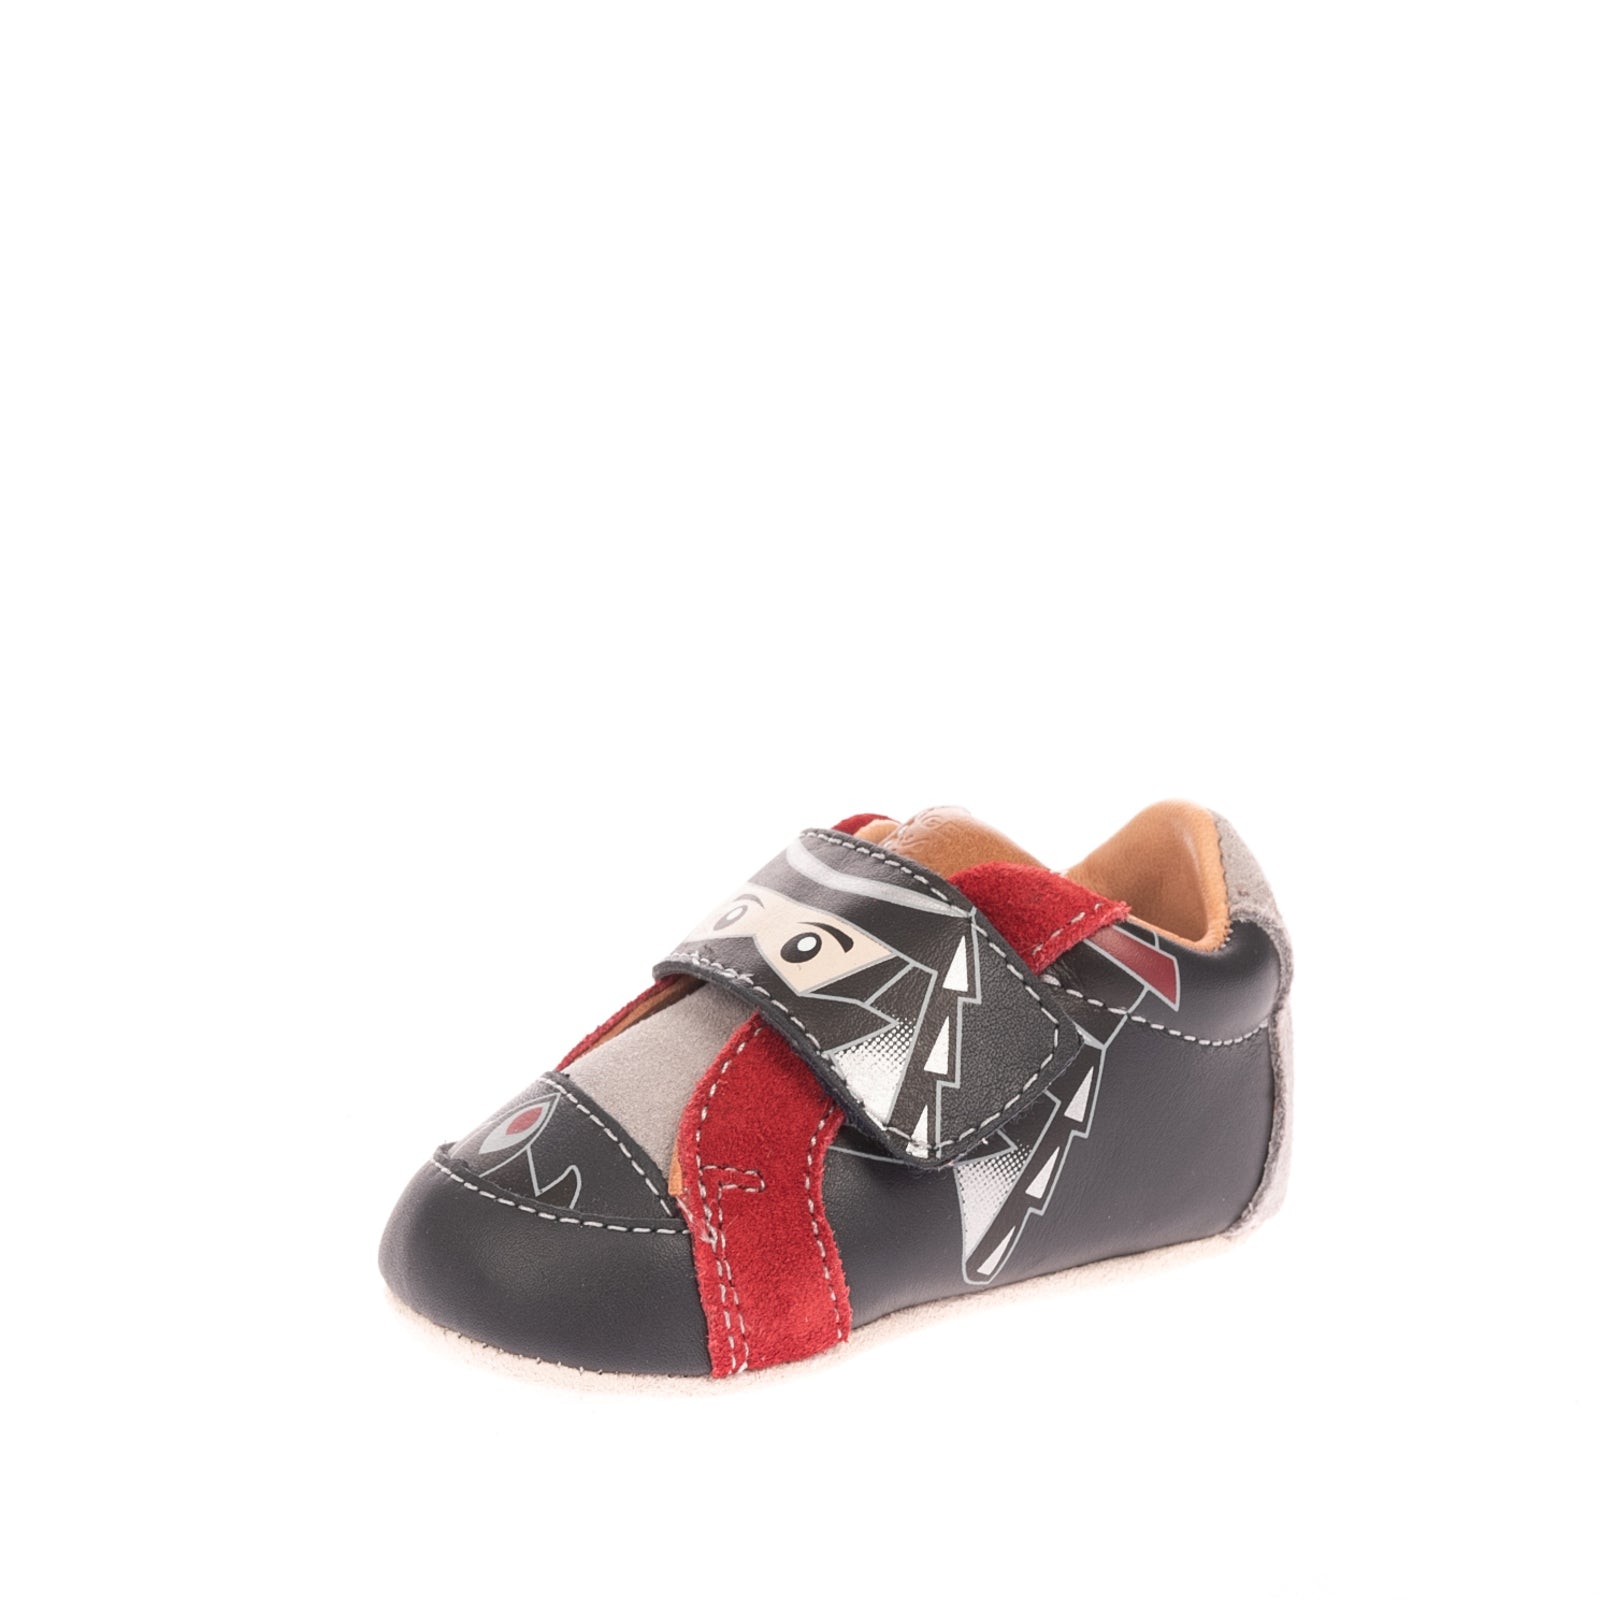 GEOX RESPIRA Baby Leather Sneakers Size 18 UK 2.5 US 3 Ninjago Chromium Free gallery main photo